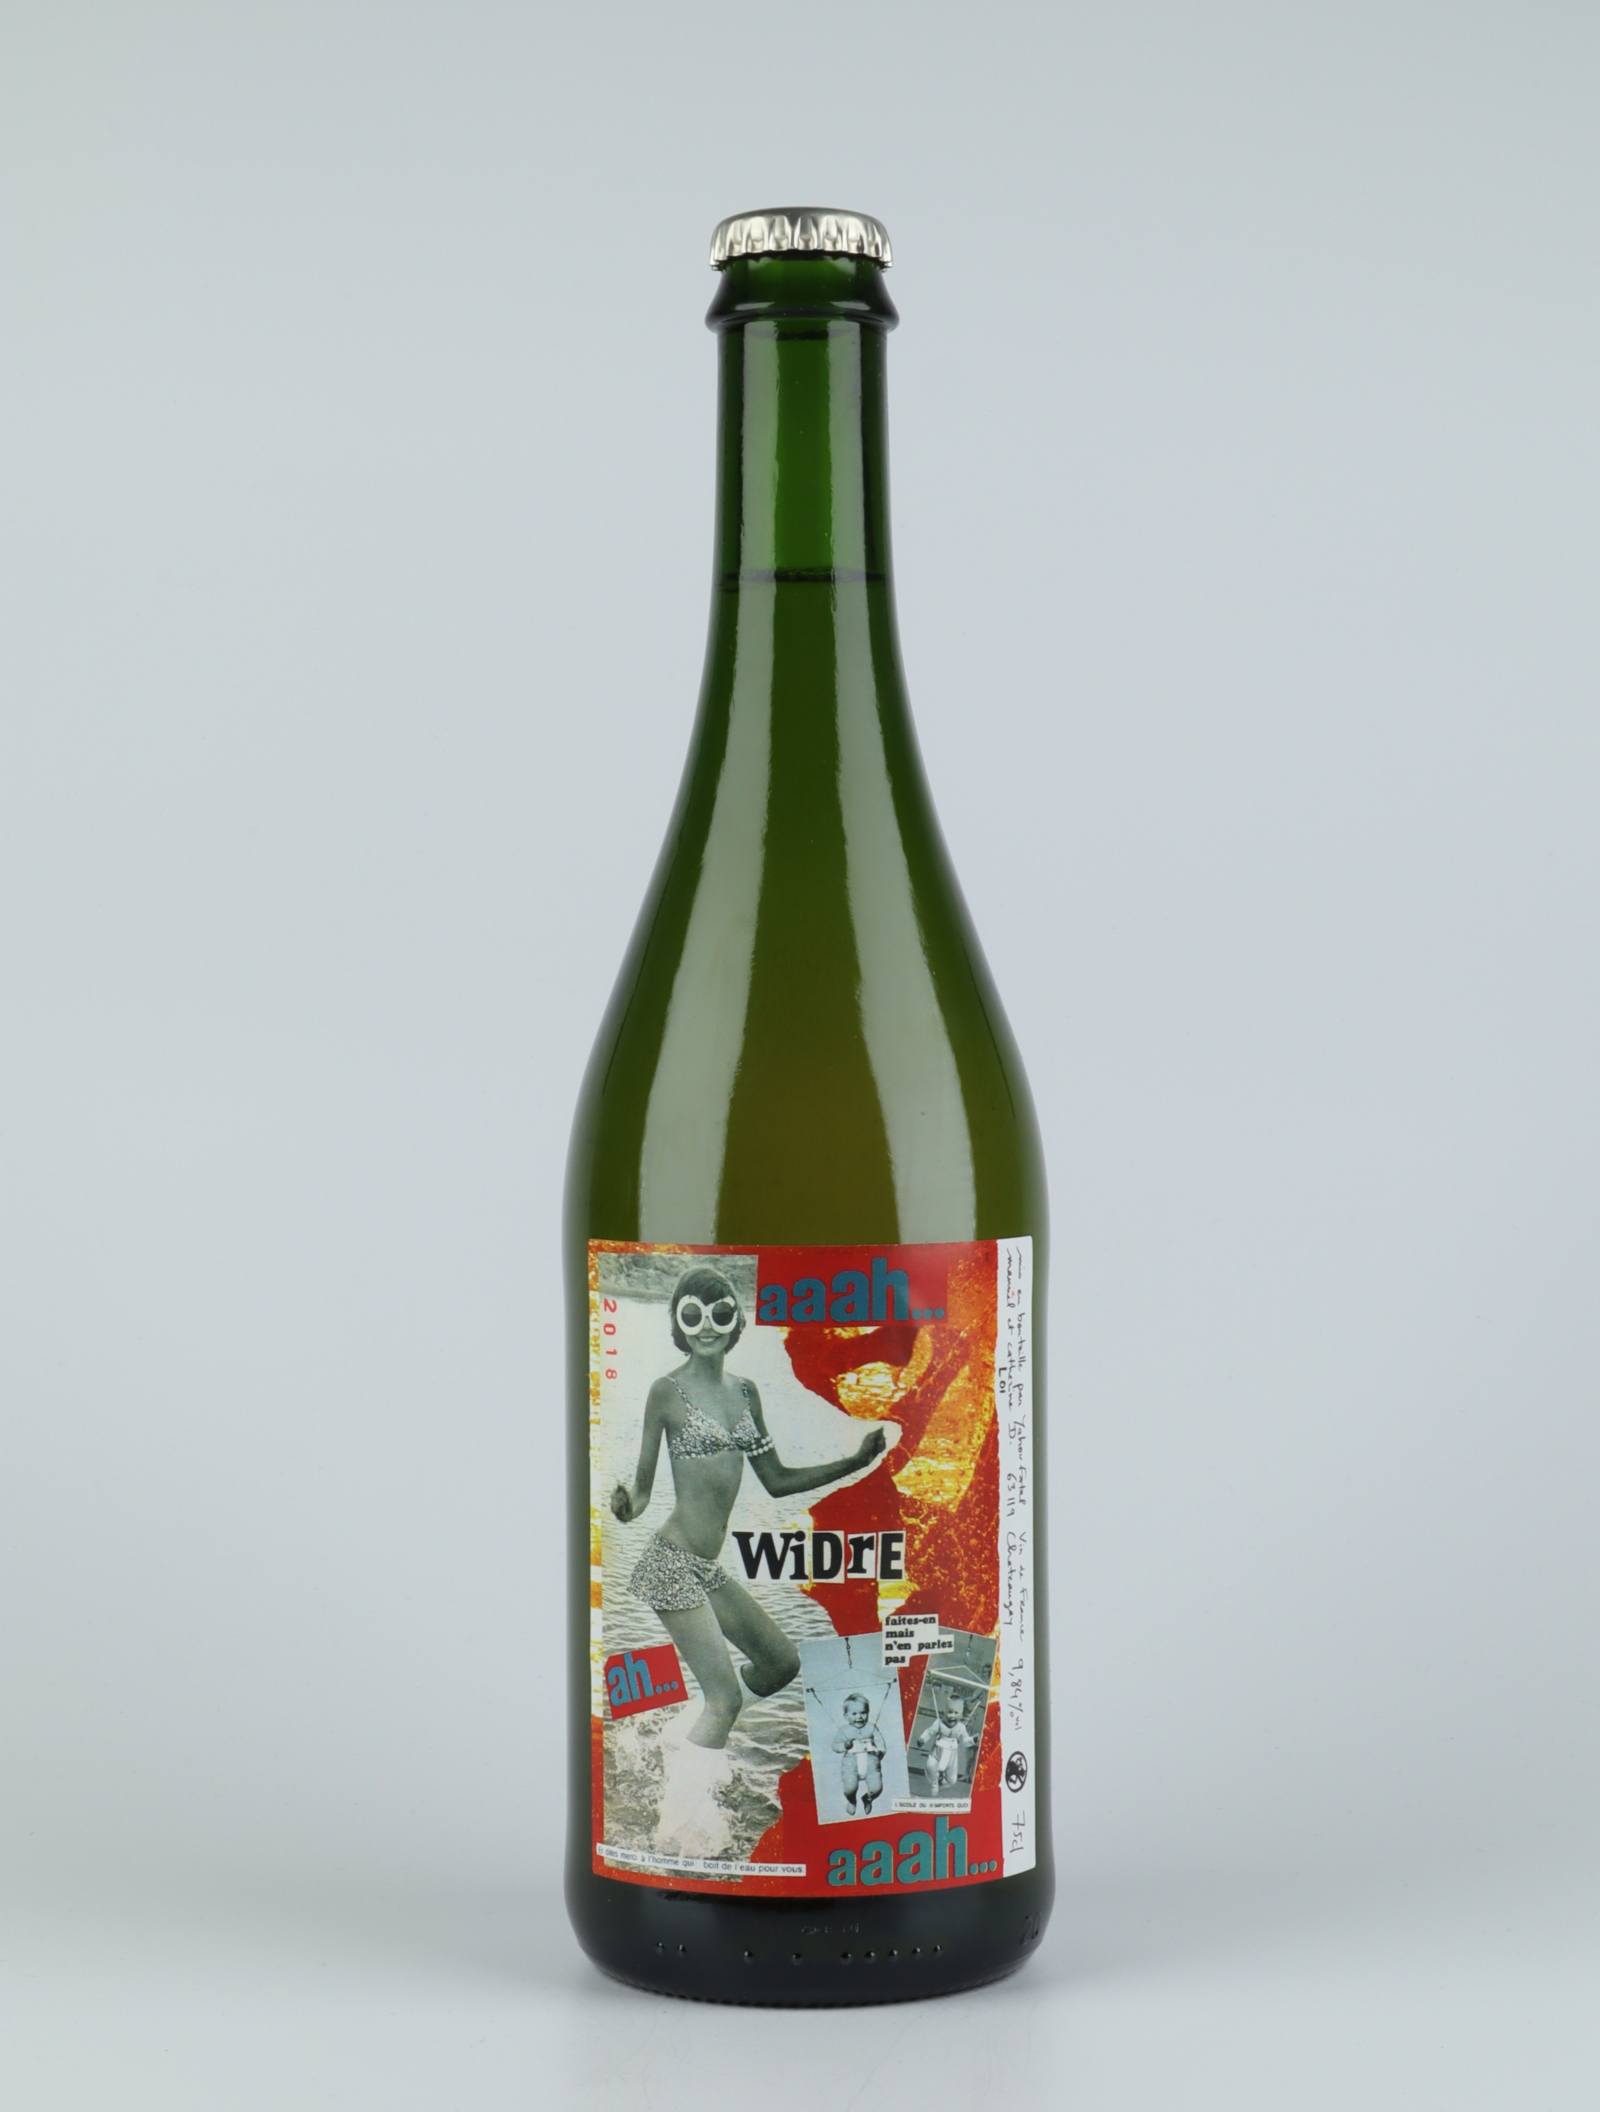 A bottle 2018 Cuvée Widre Cider from Yahou Fatal, Auvergne in France